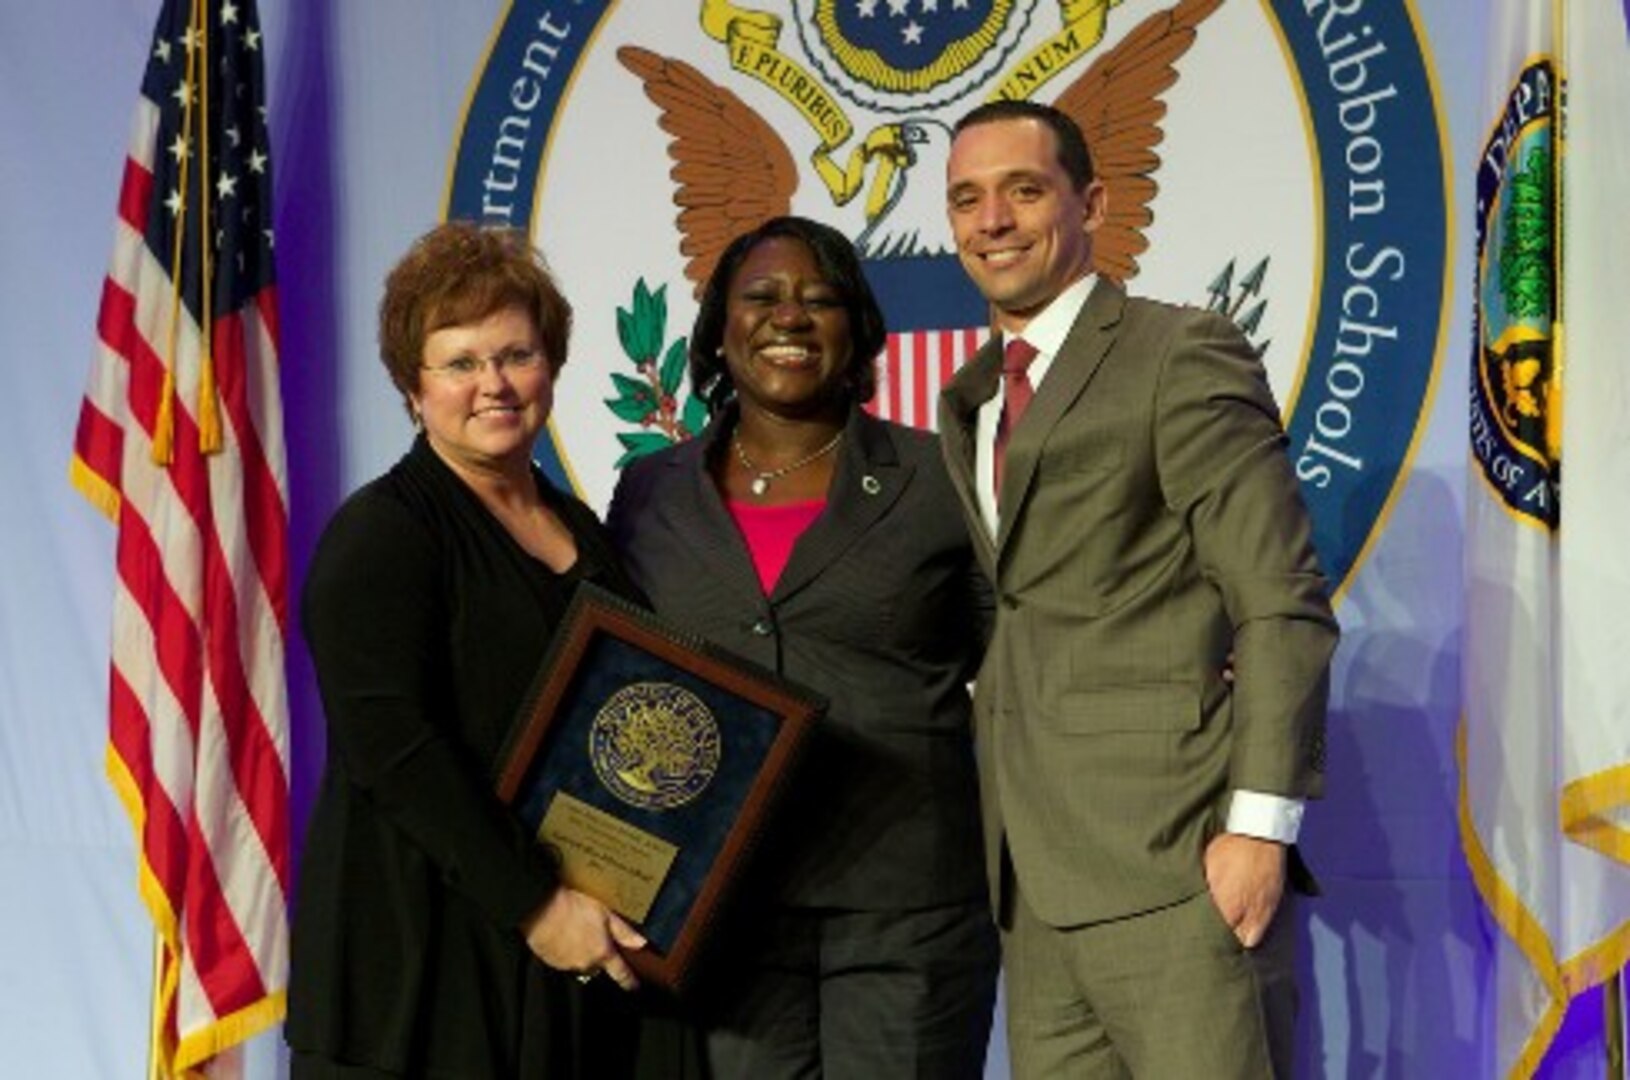 Principal Maria Buchwald accepted the National Blue Ribbon Award on behalf of SAMS this week in Washington DC.